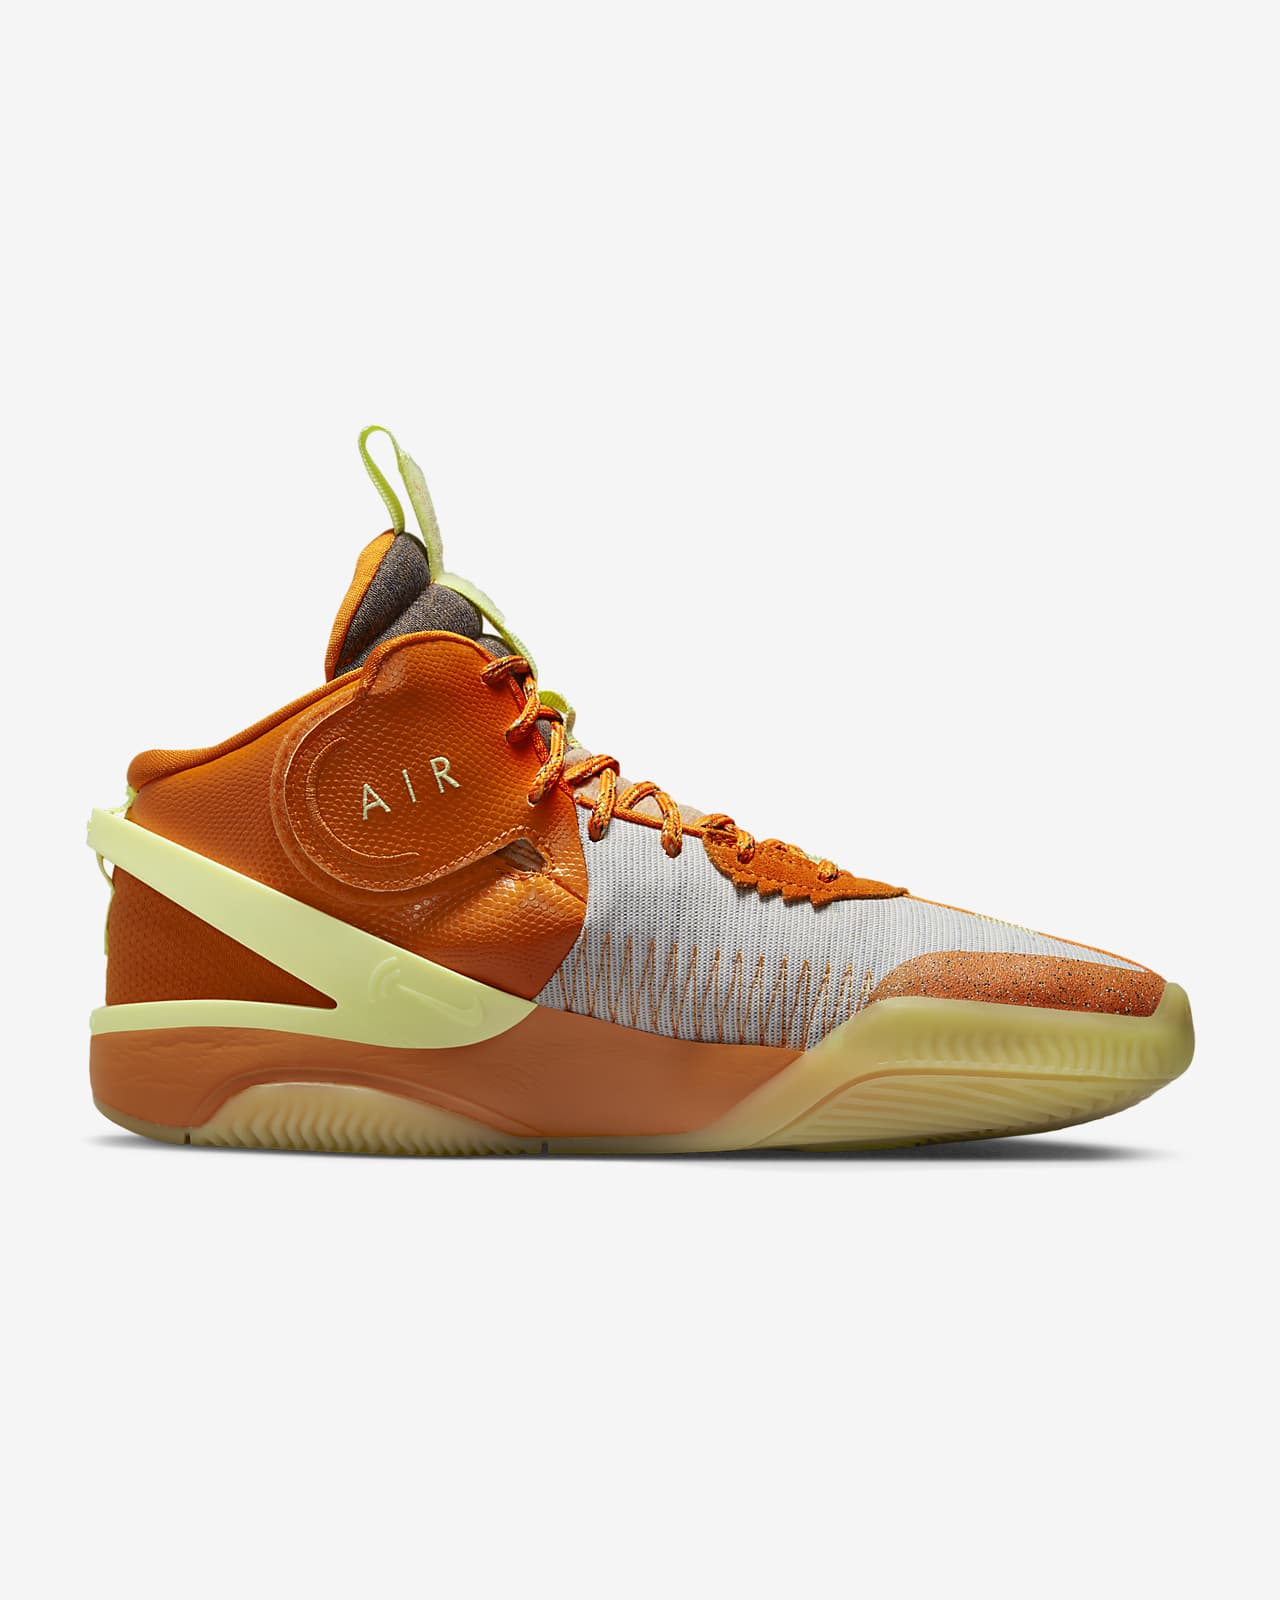 Nike Air Deldon "Hoodie" Basketball Shoes.